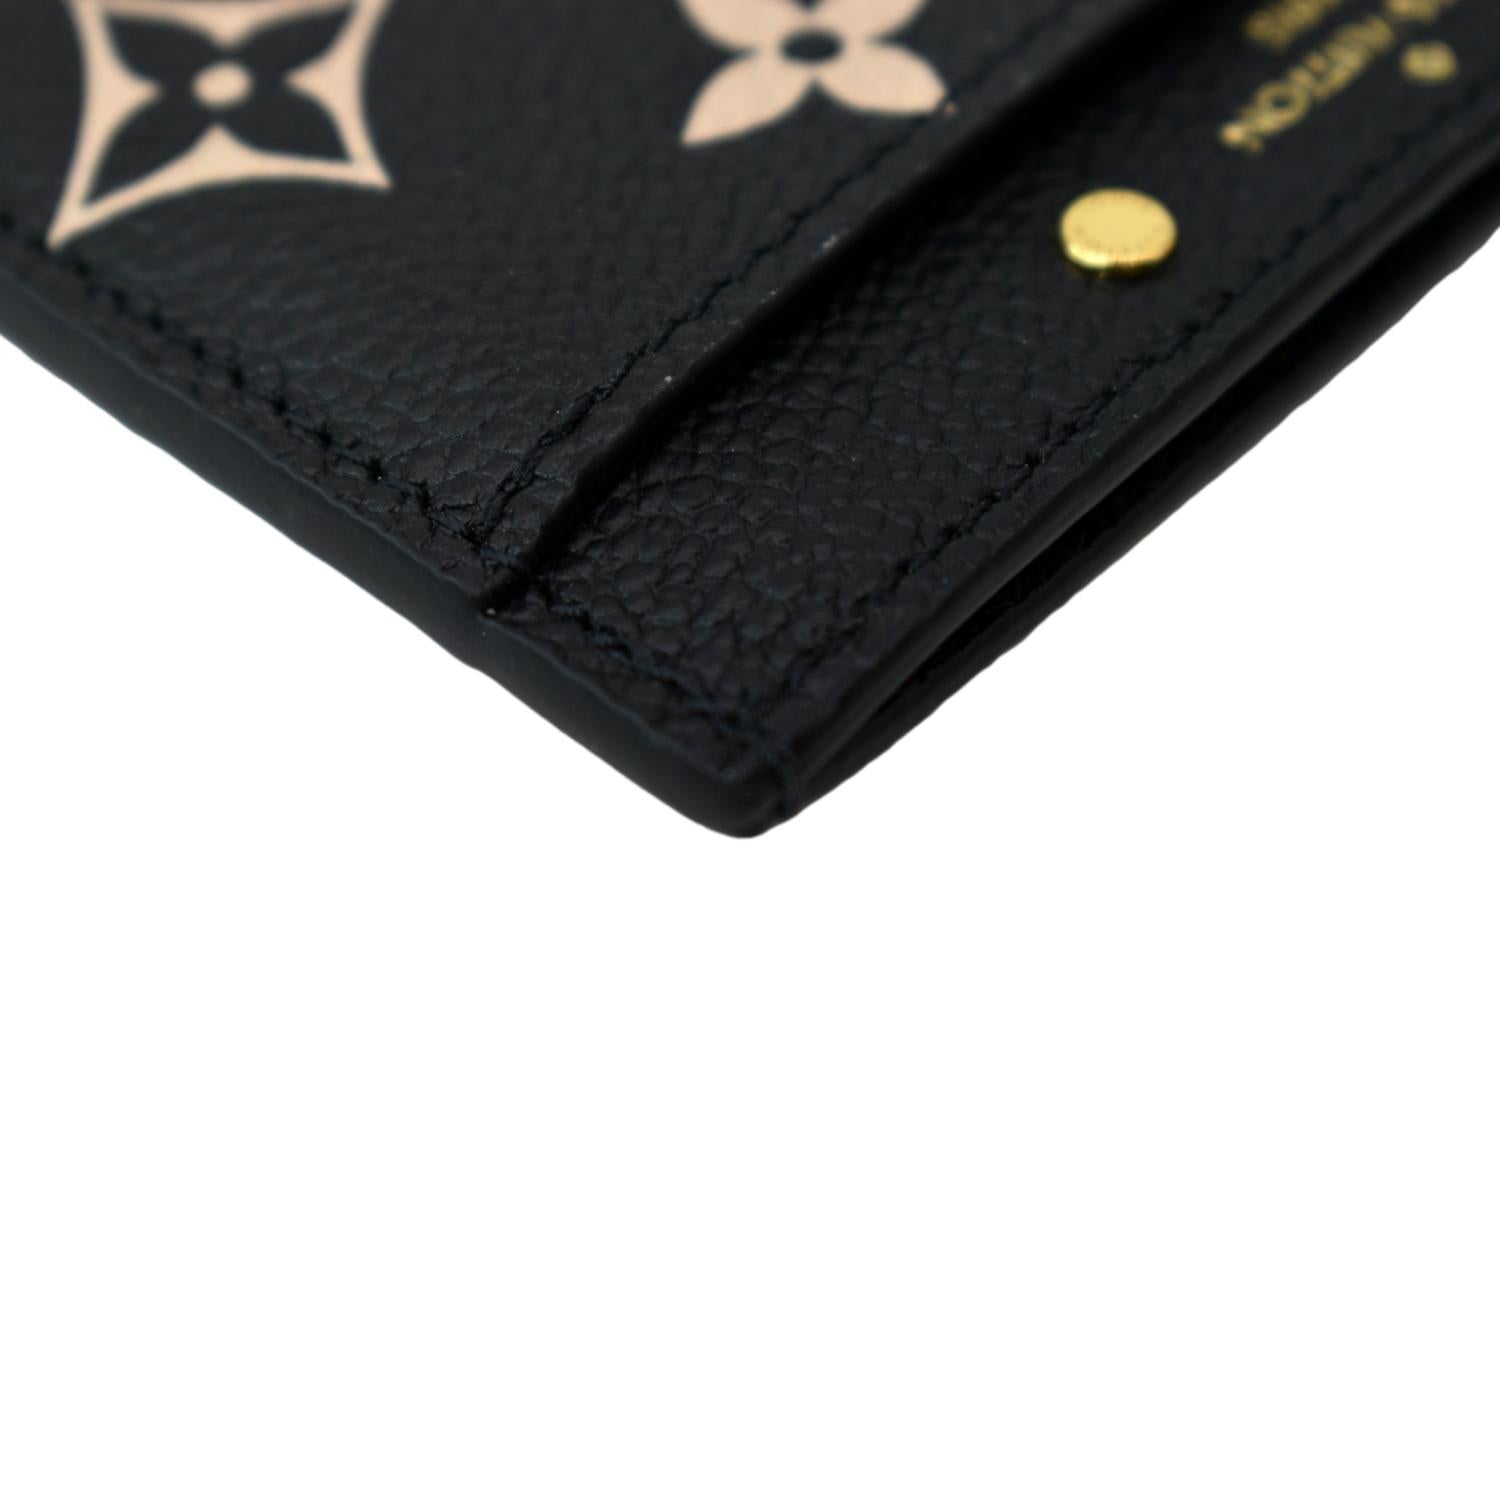 Card Holders & Card Wallets for Women - LOUIS VUITTON